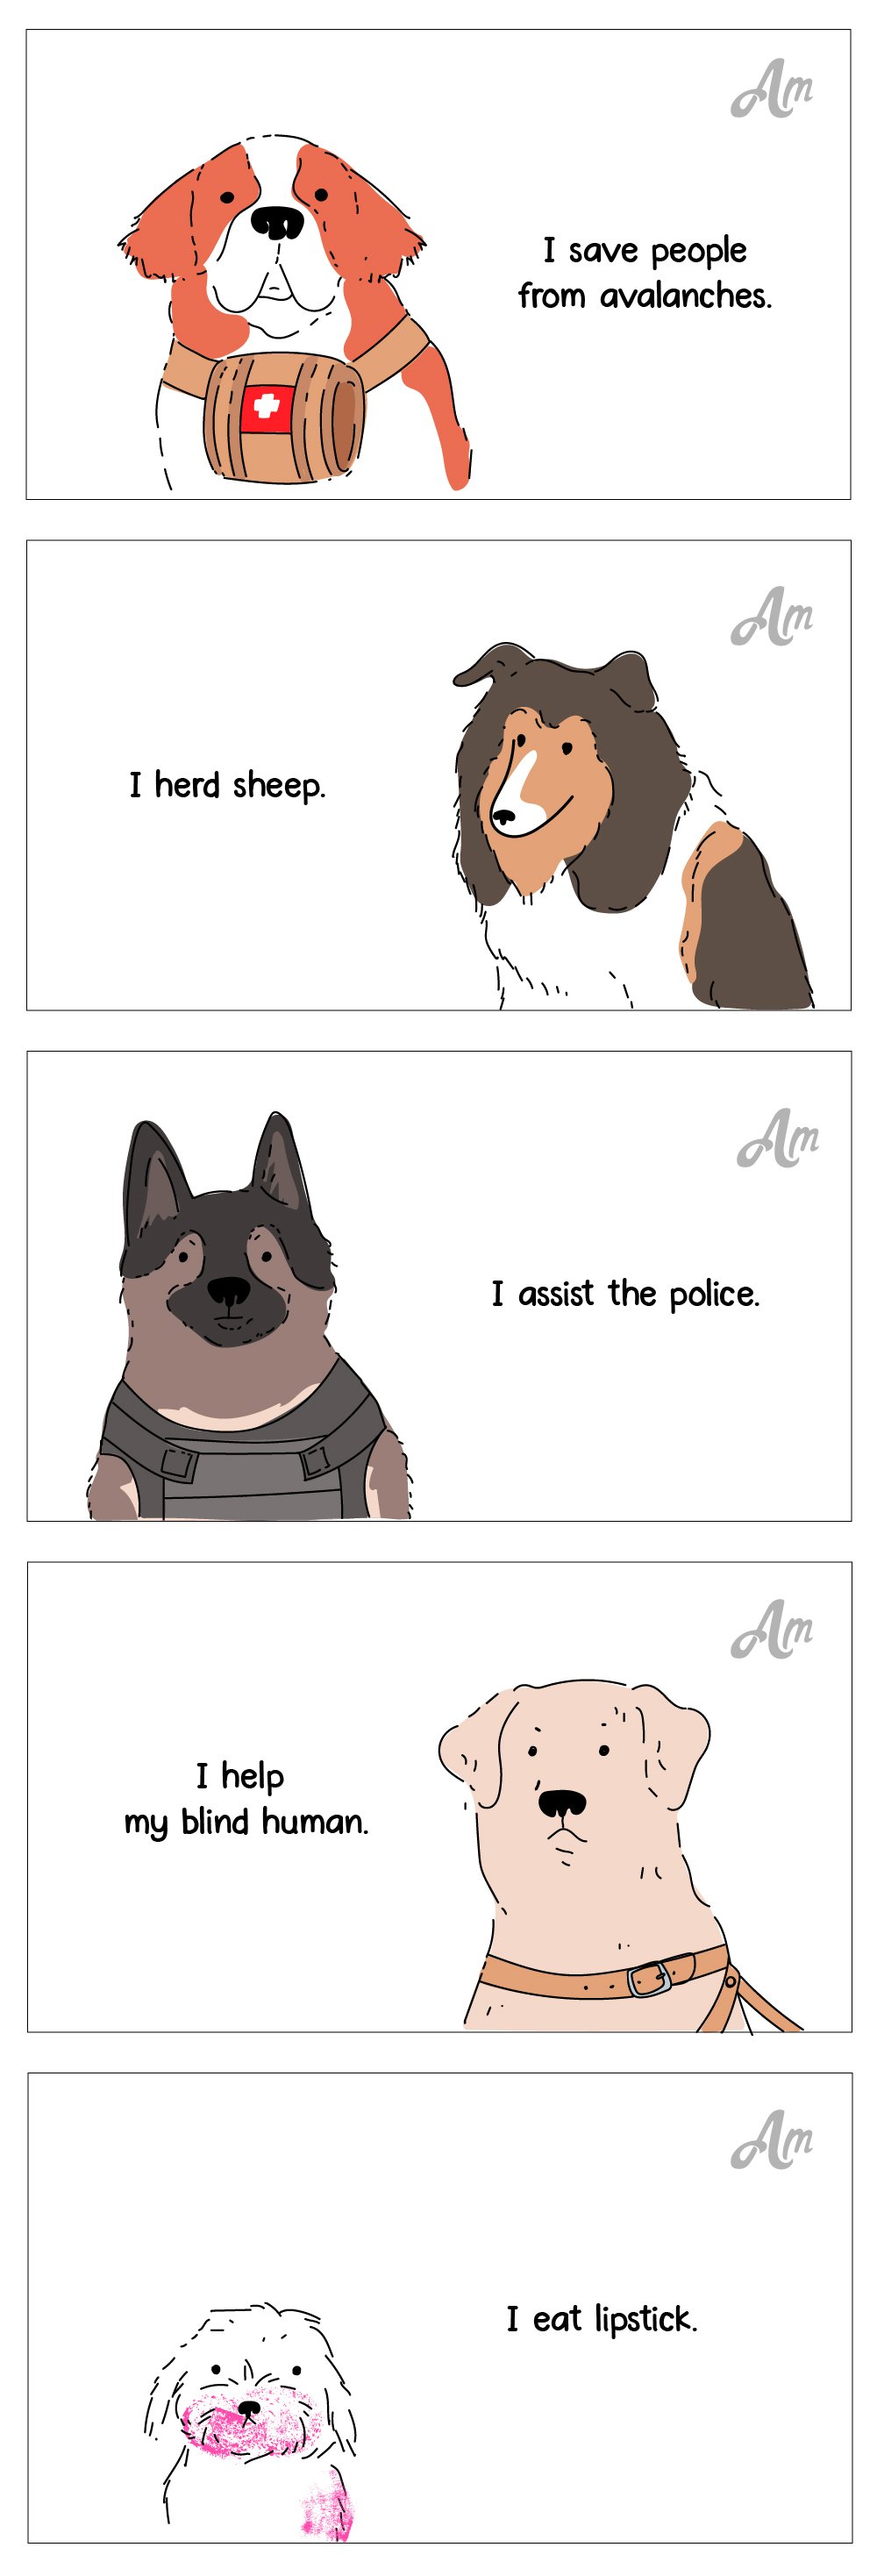 A special doggie cartoon! | Source: Amomama